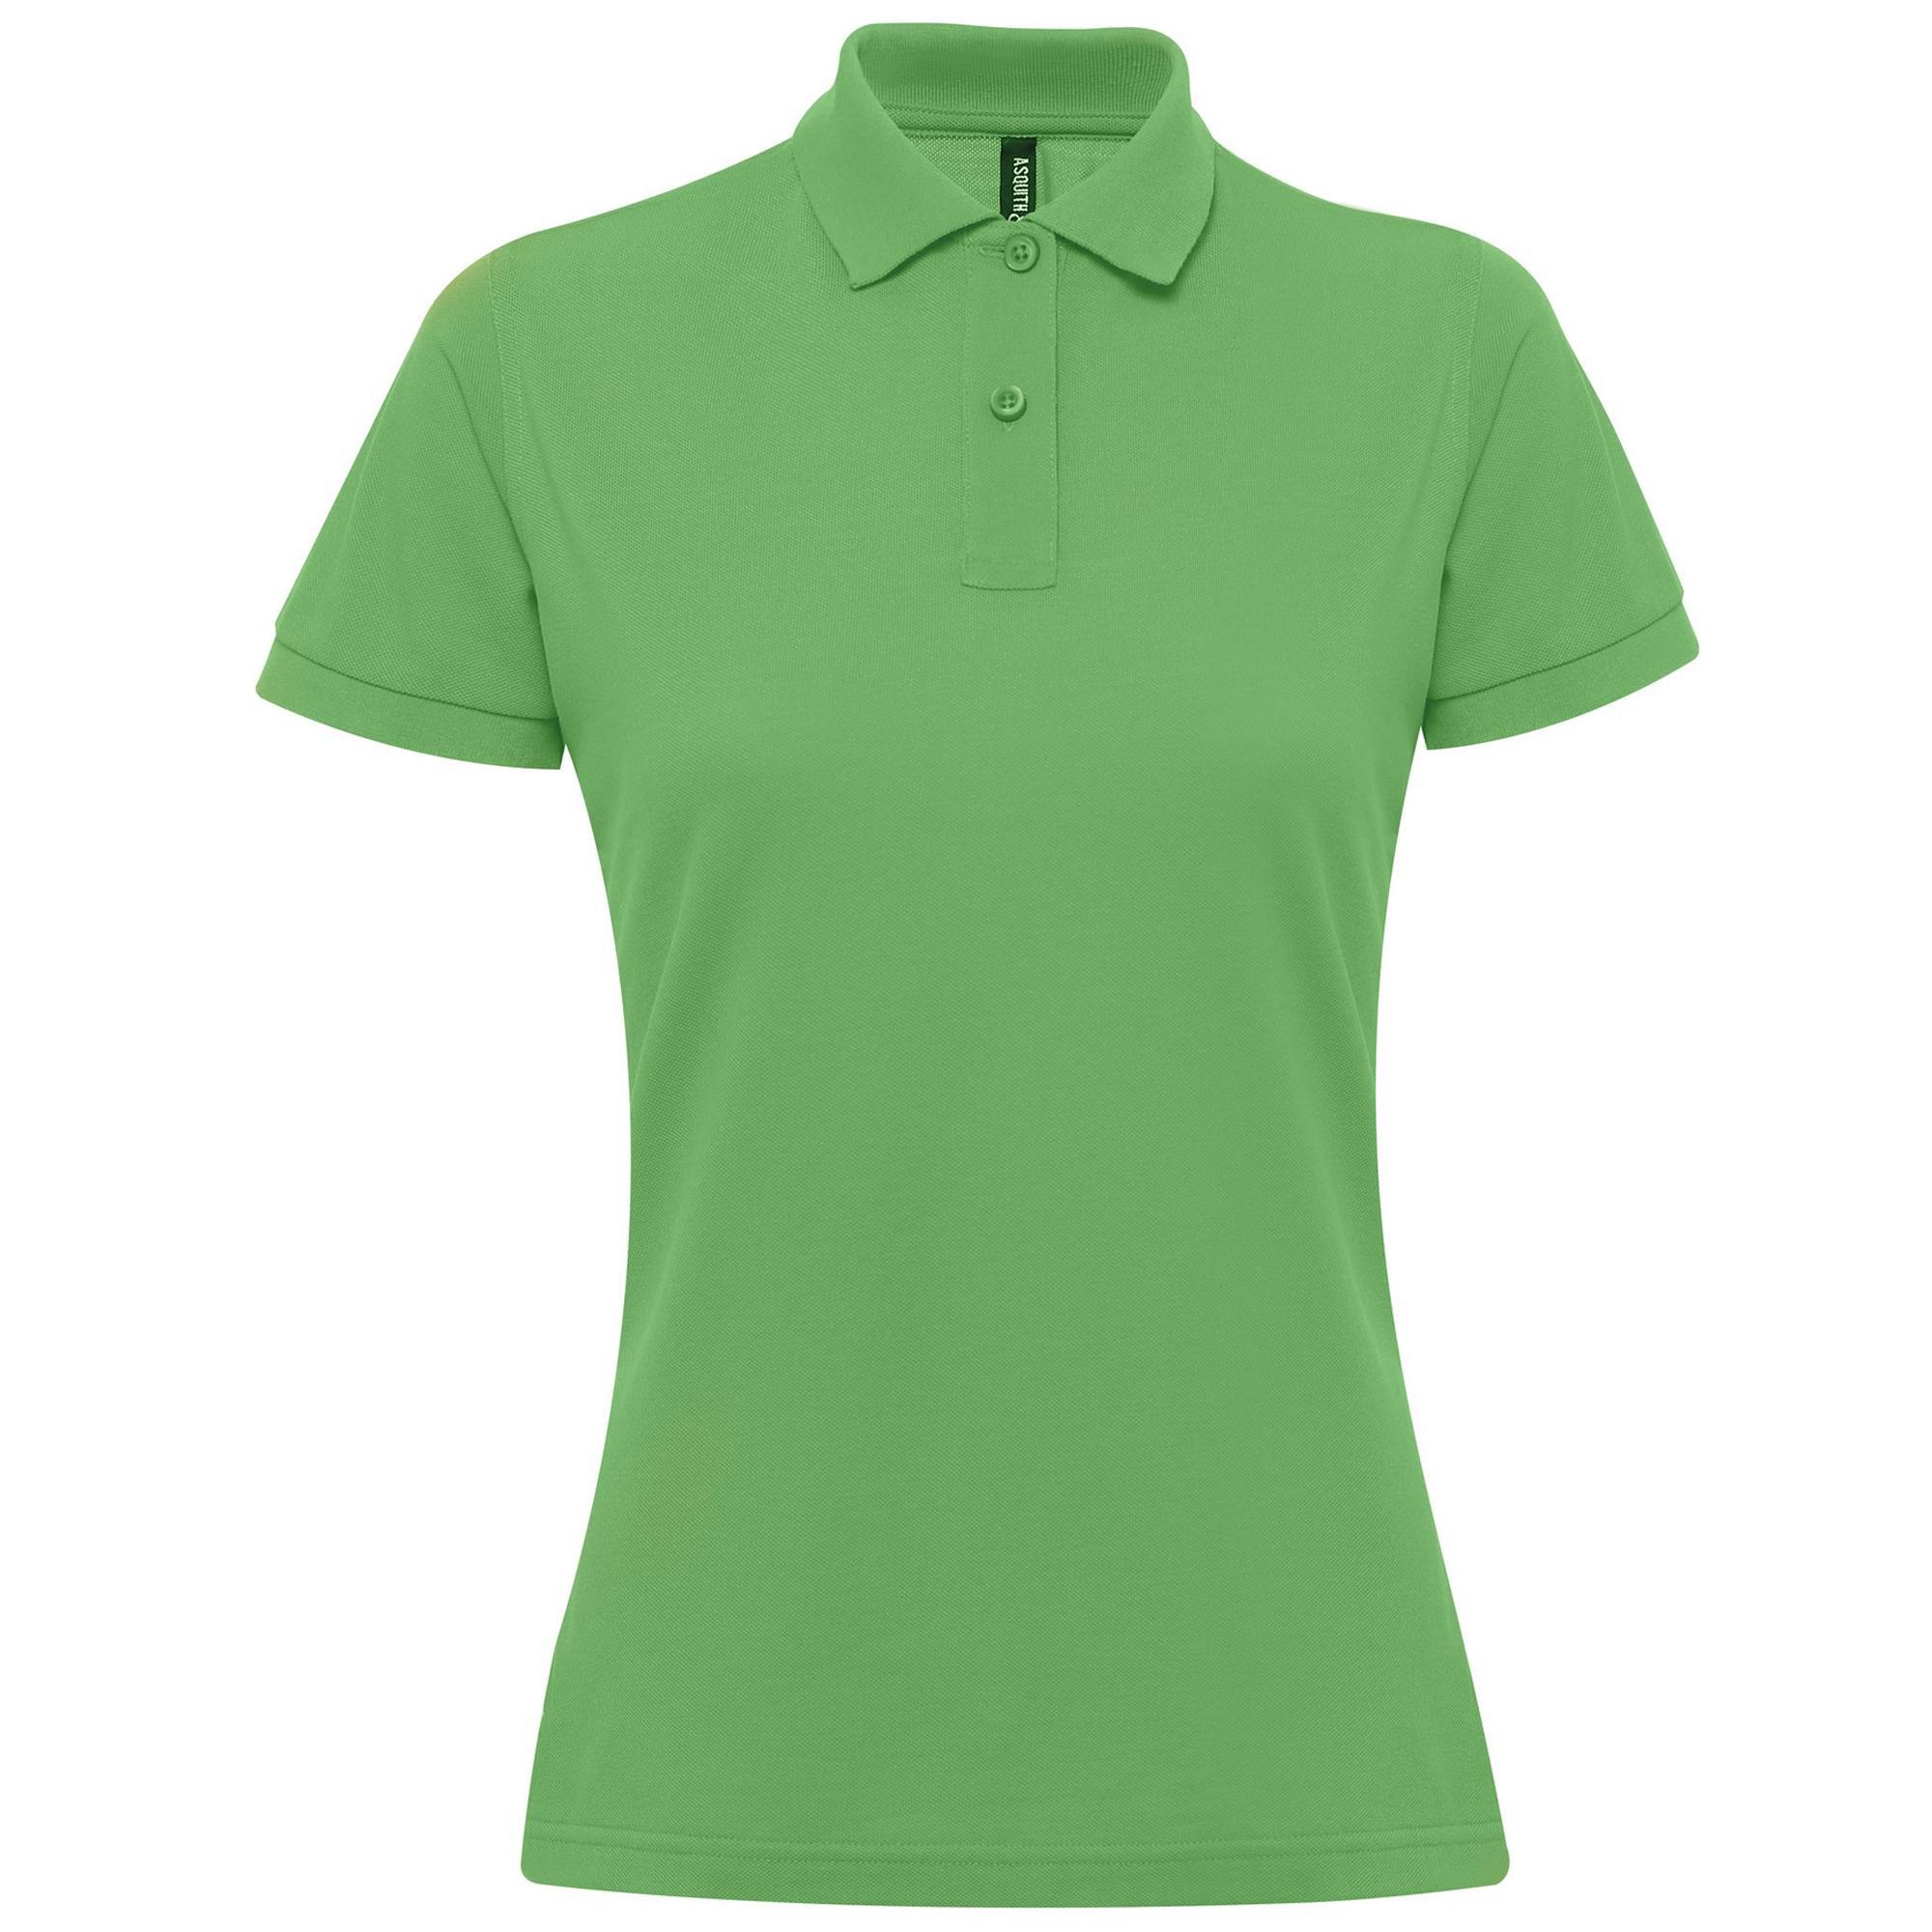 Asquith & Fox Womens/Ladies Short Sleeve Performance Blend Polo Shirt (Kelly) (L)